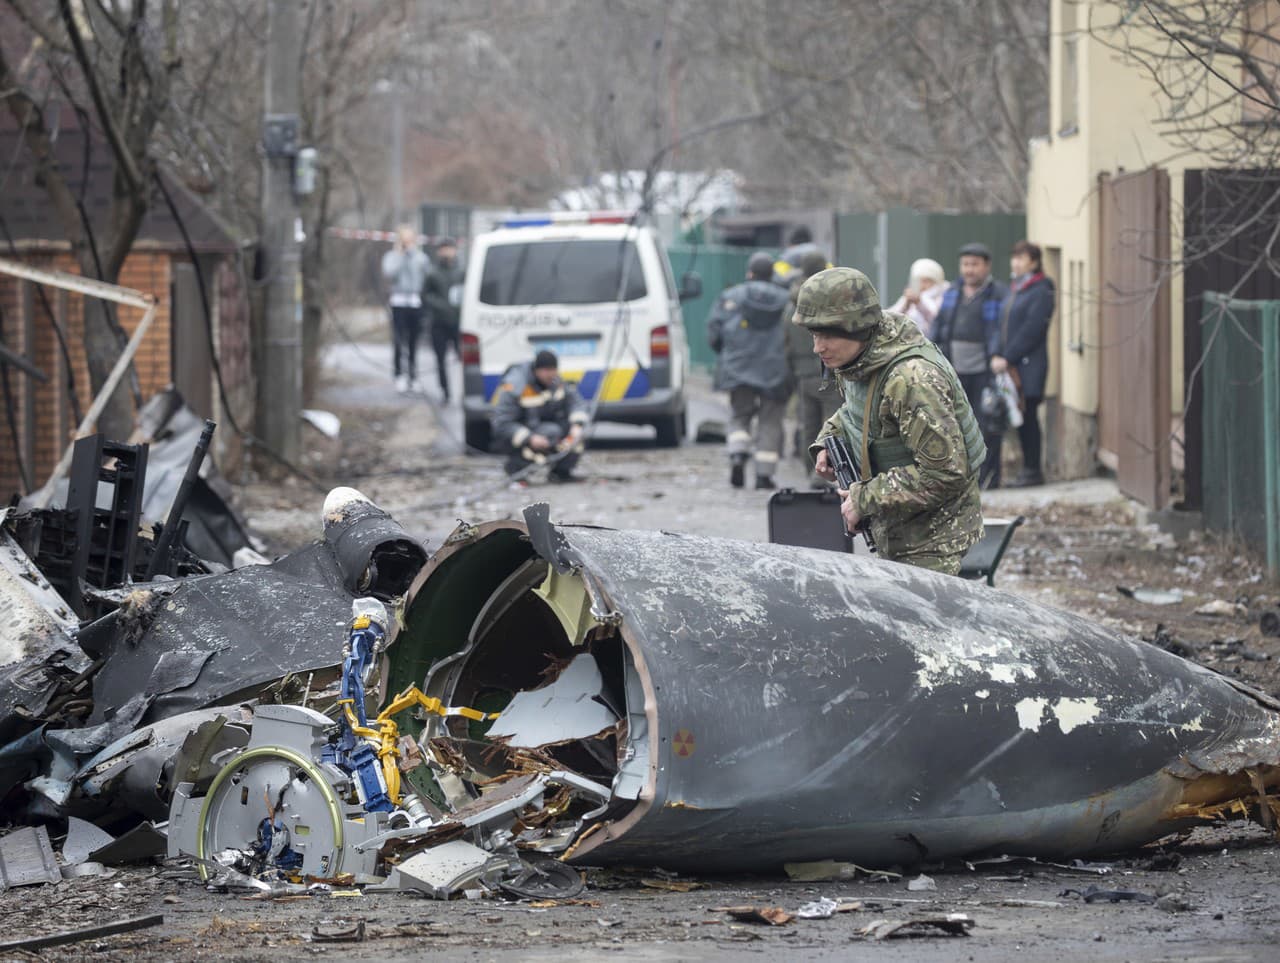 Vojak ukrajinskej armády kontroluje úlomky zostreleného lietadla v Kyjeve na Ukrajine v piatok 25. februára 2022.